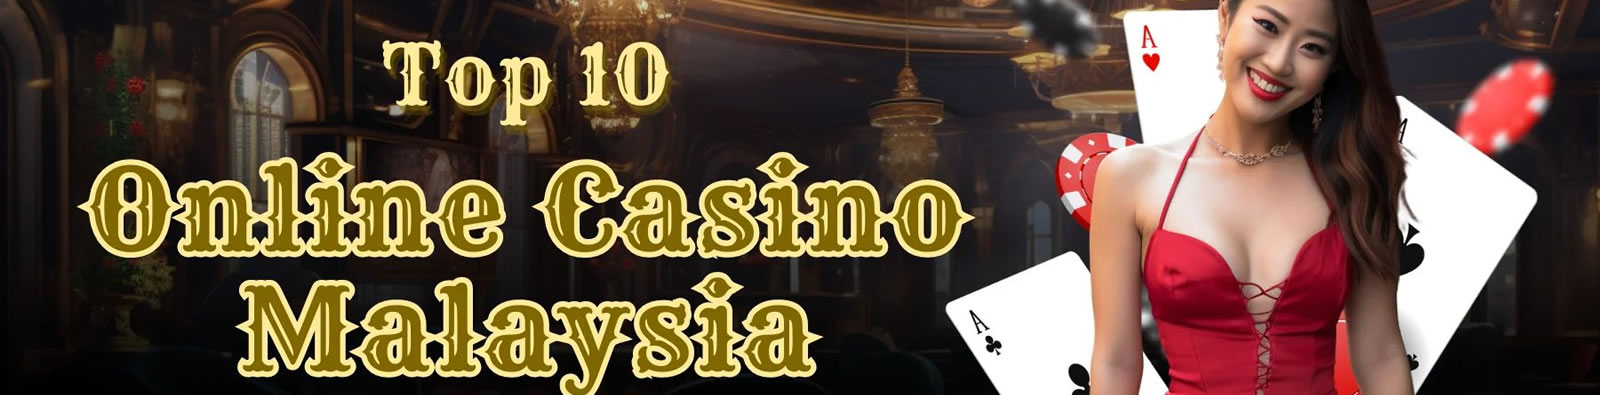 U9play Casino